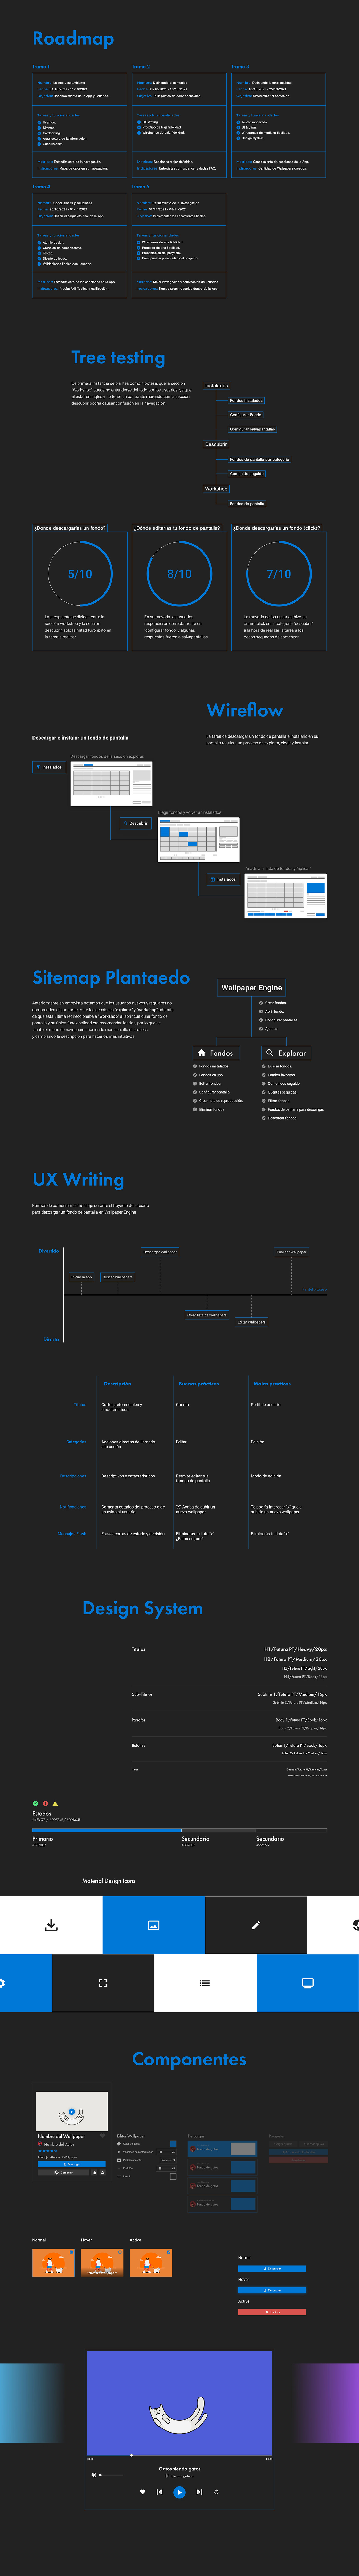 coderhouse Interface re-design wallpaper design Steam chile modern UX Case Study UI/UX